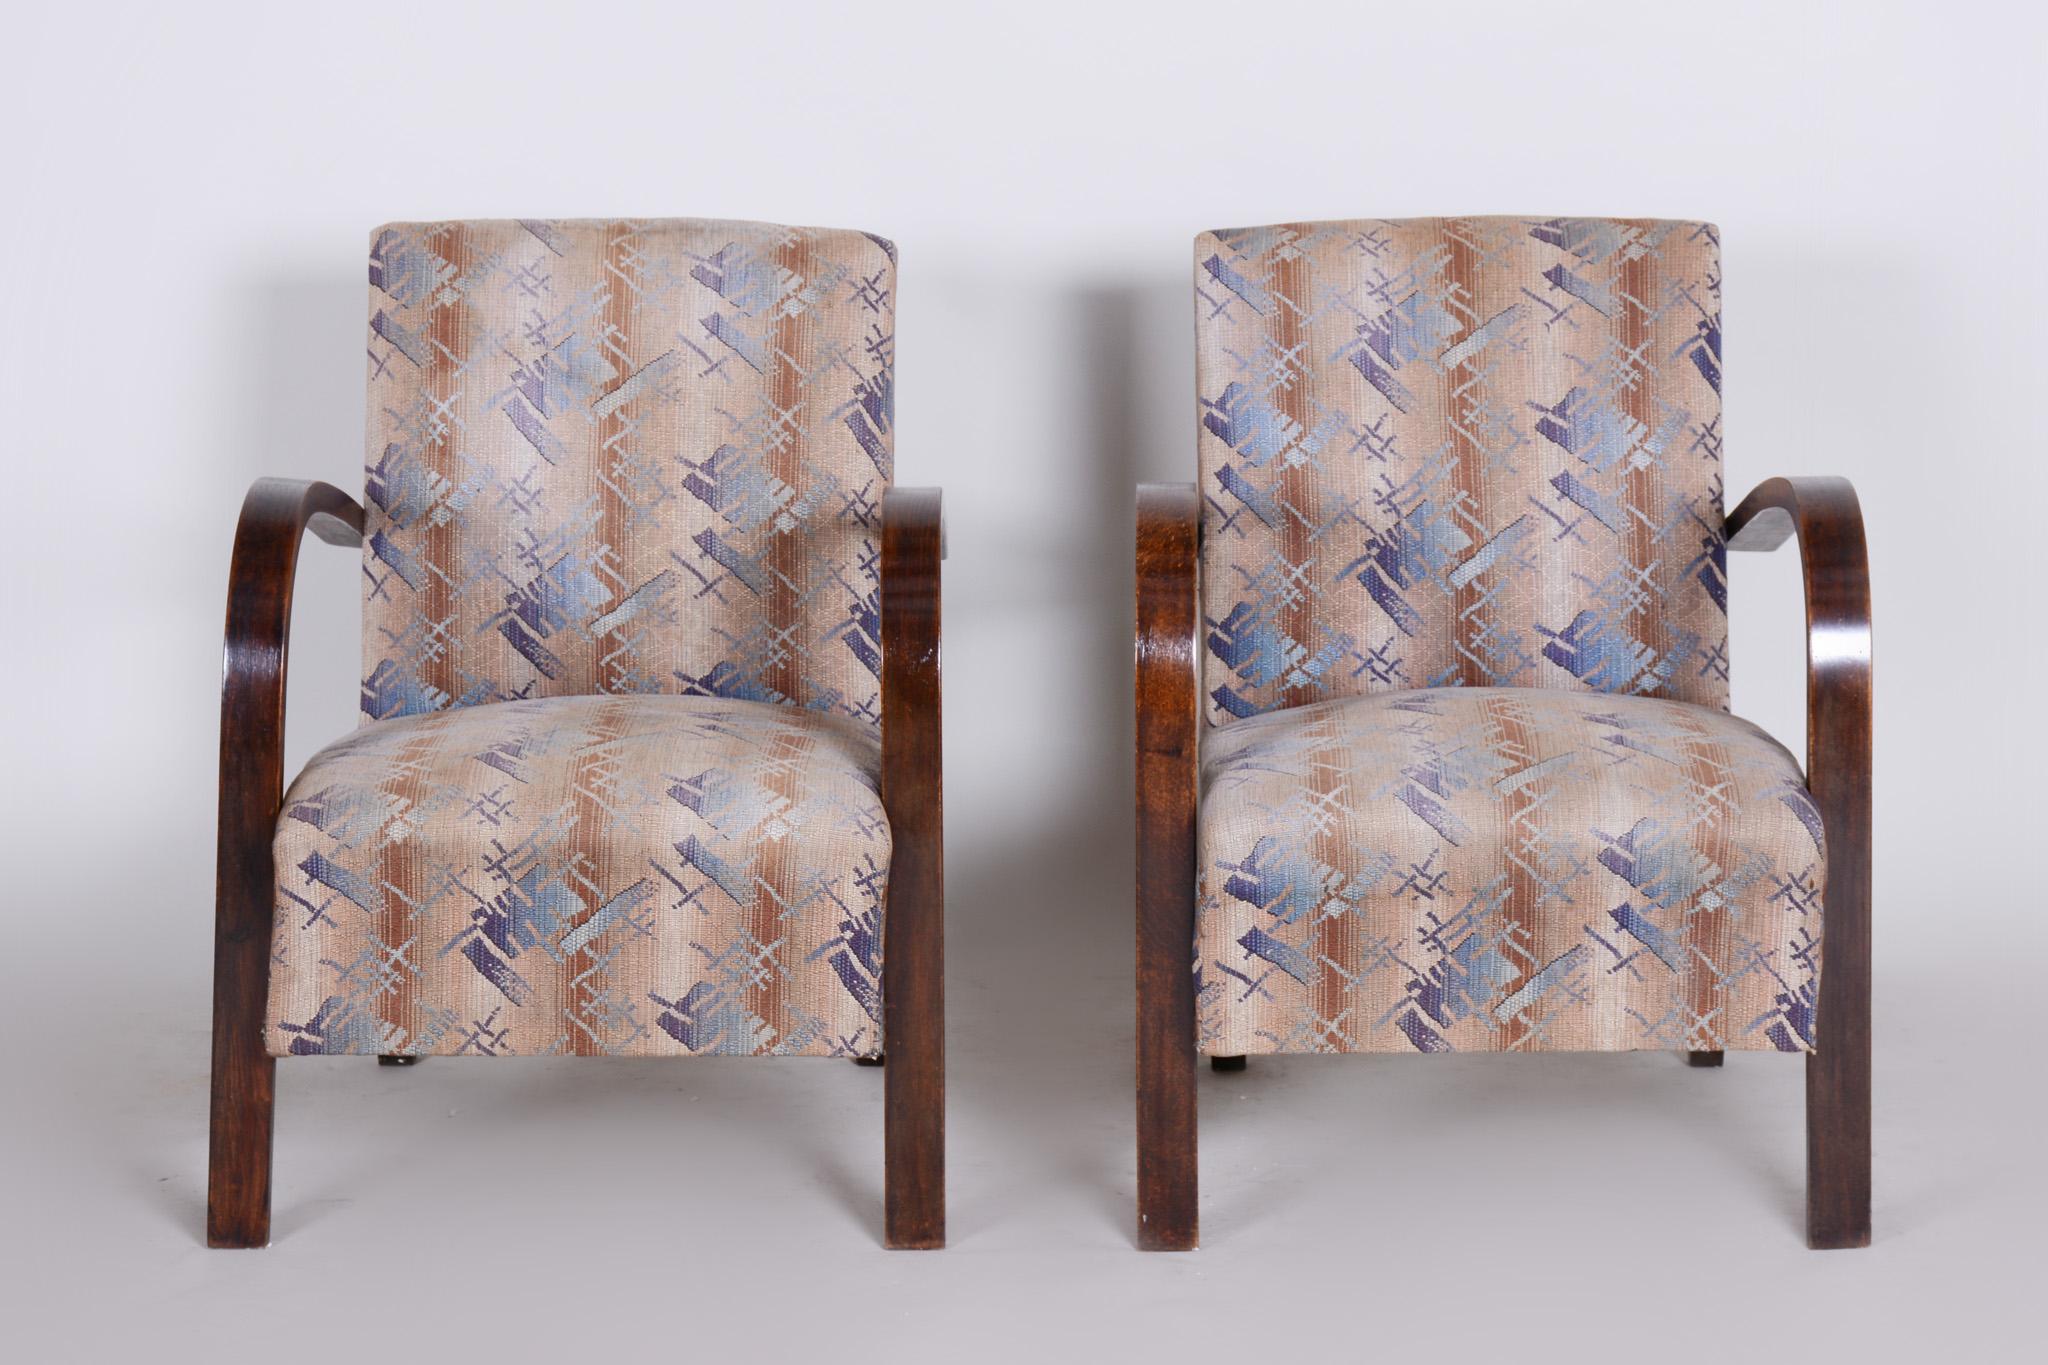 Pair of Art Deco armchairs
Source: Czech republic
Period: 1920-1929.
Material: Beech
Original well preserved condition.

 